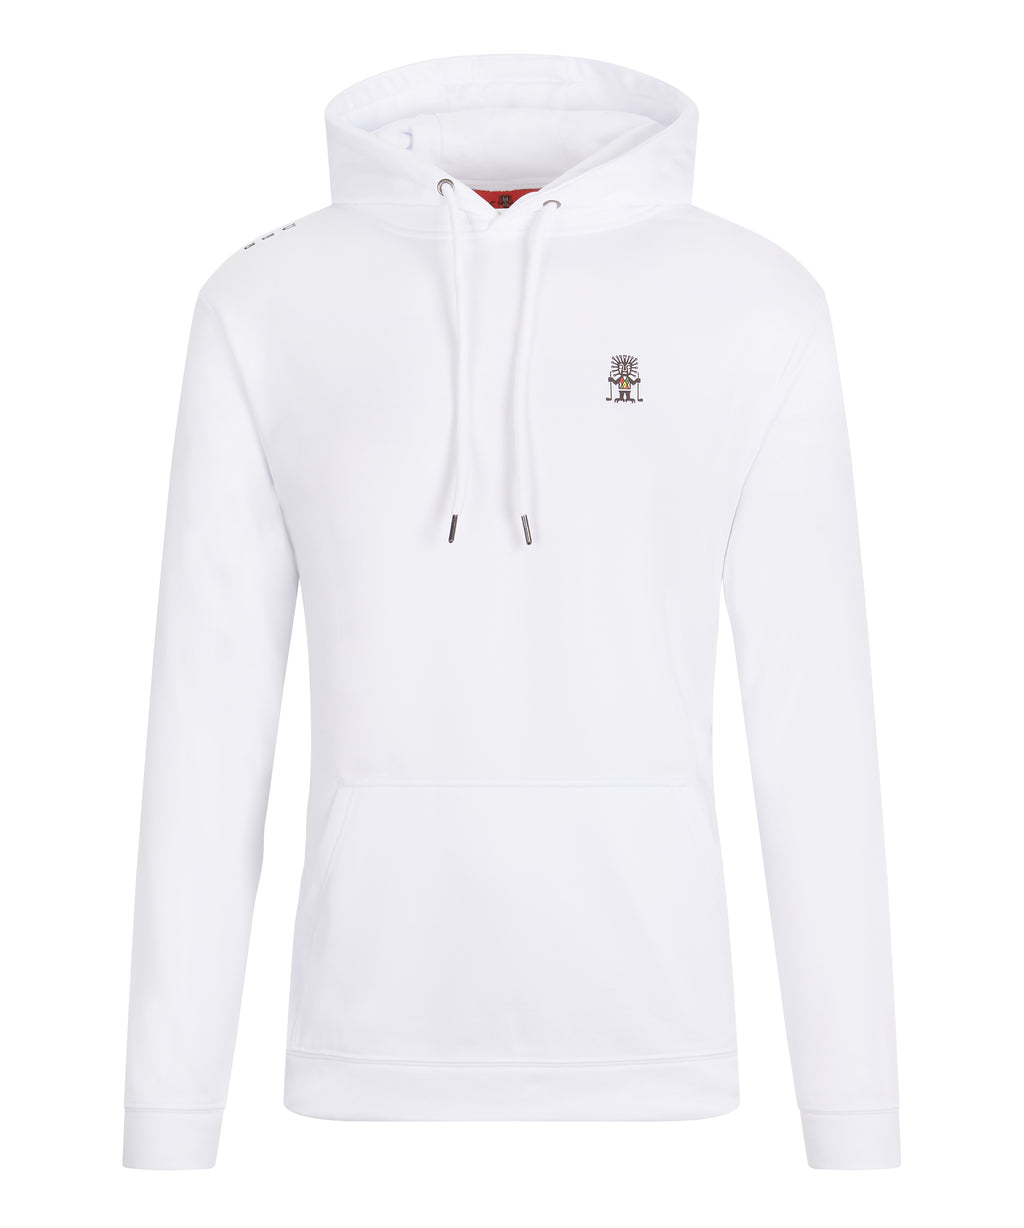 Golf God Clothing Classic Logo Hoodie - White